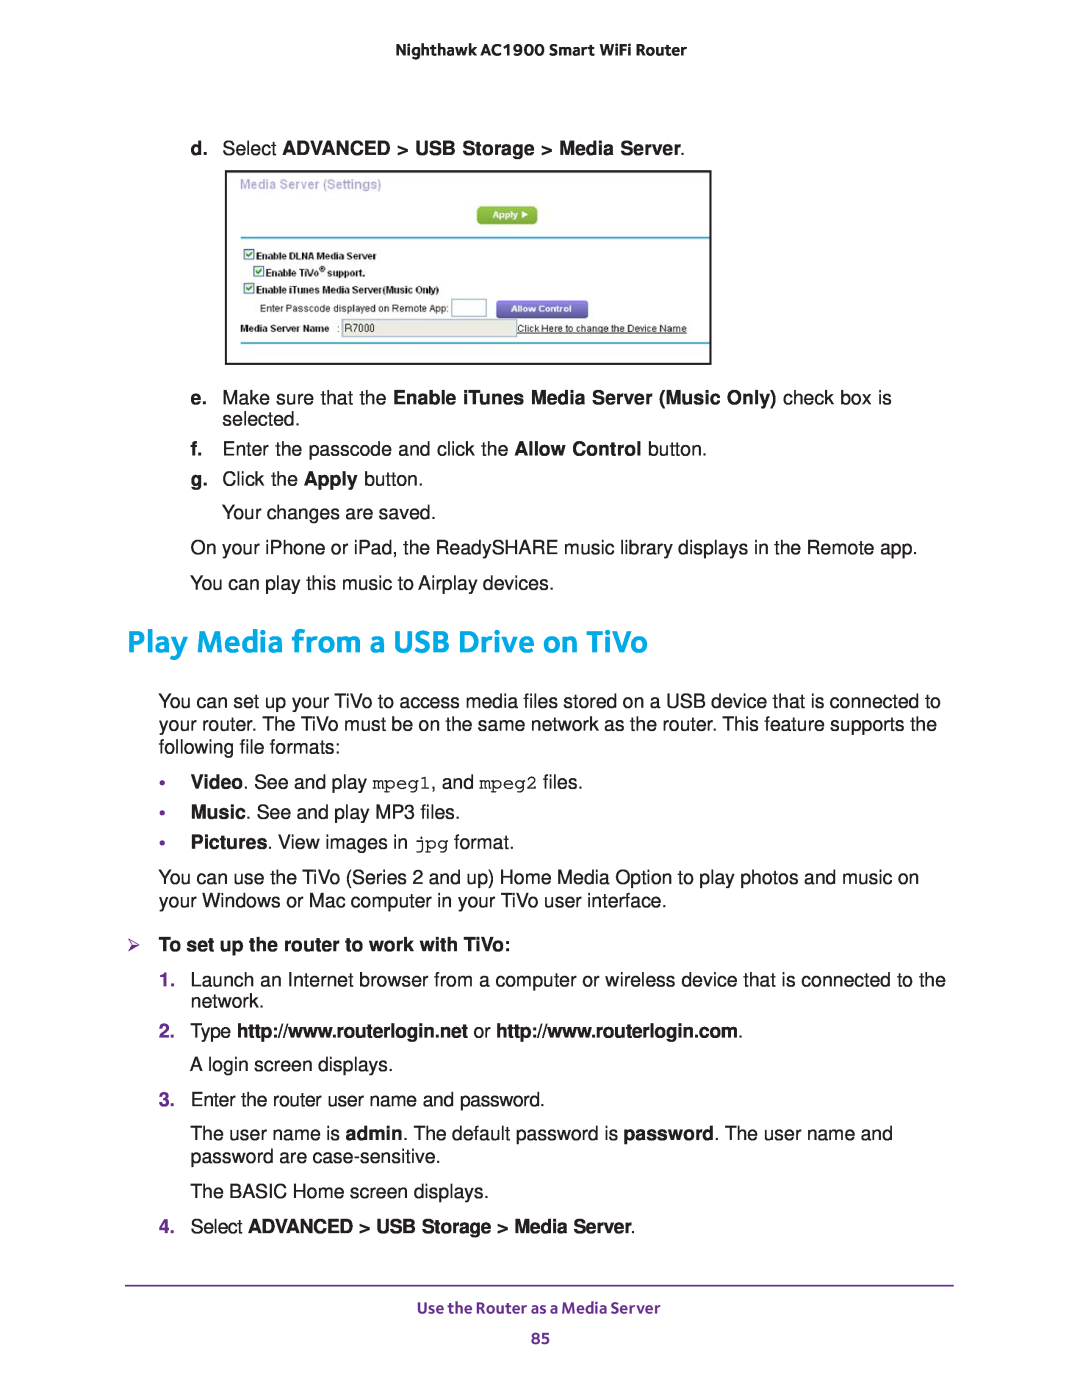 NETGEAR Model R7000 user manual Play Media from a USB Drive on TiVo, d. Select ADVANCED USB Storage Media Server 